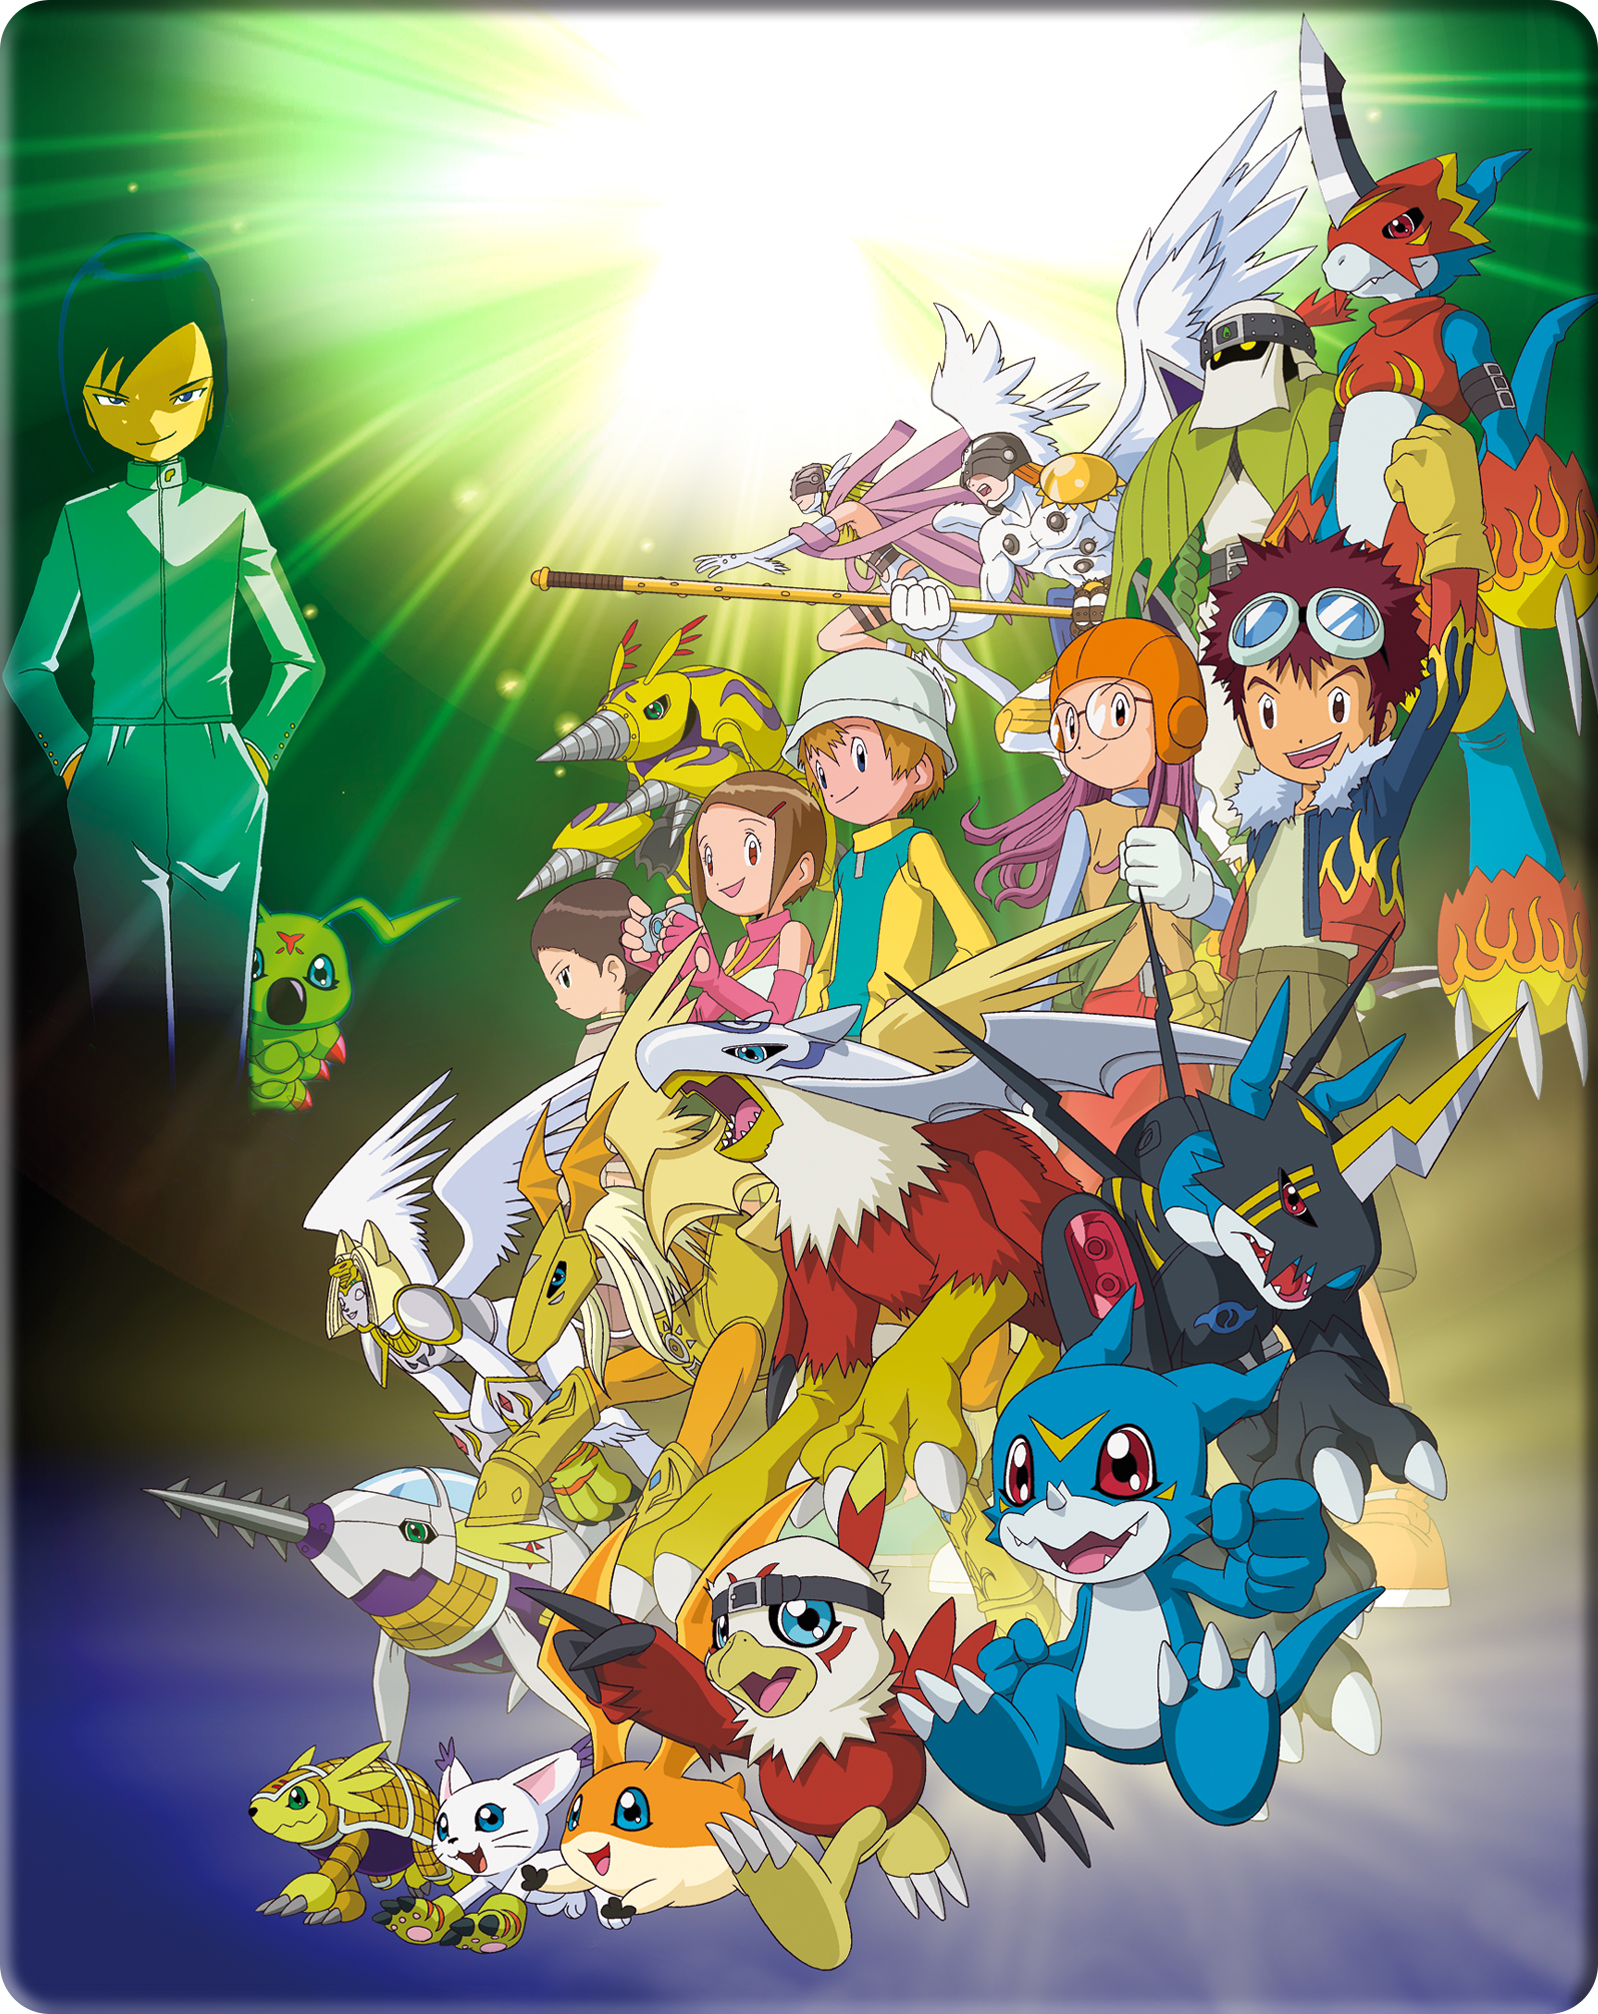 Digimon Adventure 02 - Volume 3 - Limited Edition: Episode 35-50 im FuturePak [Blu-ray] Image 2